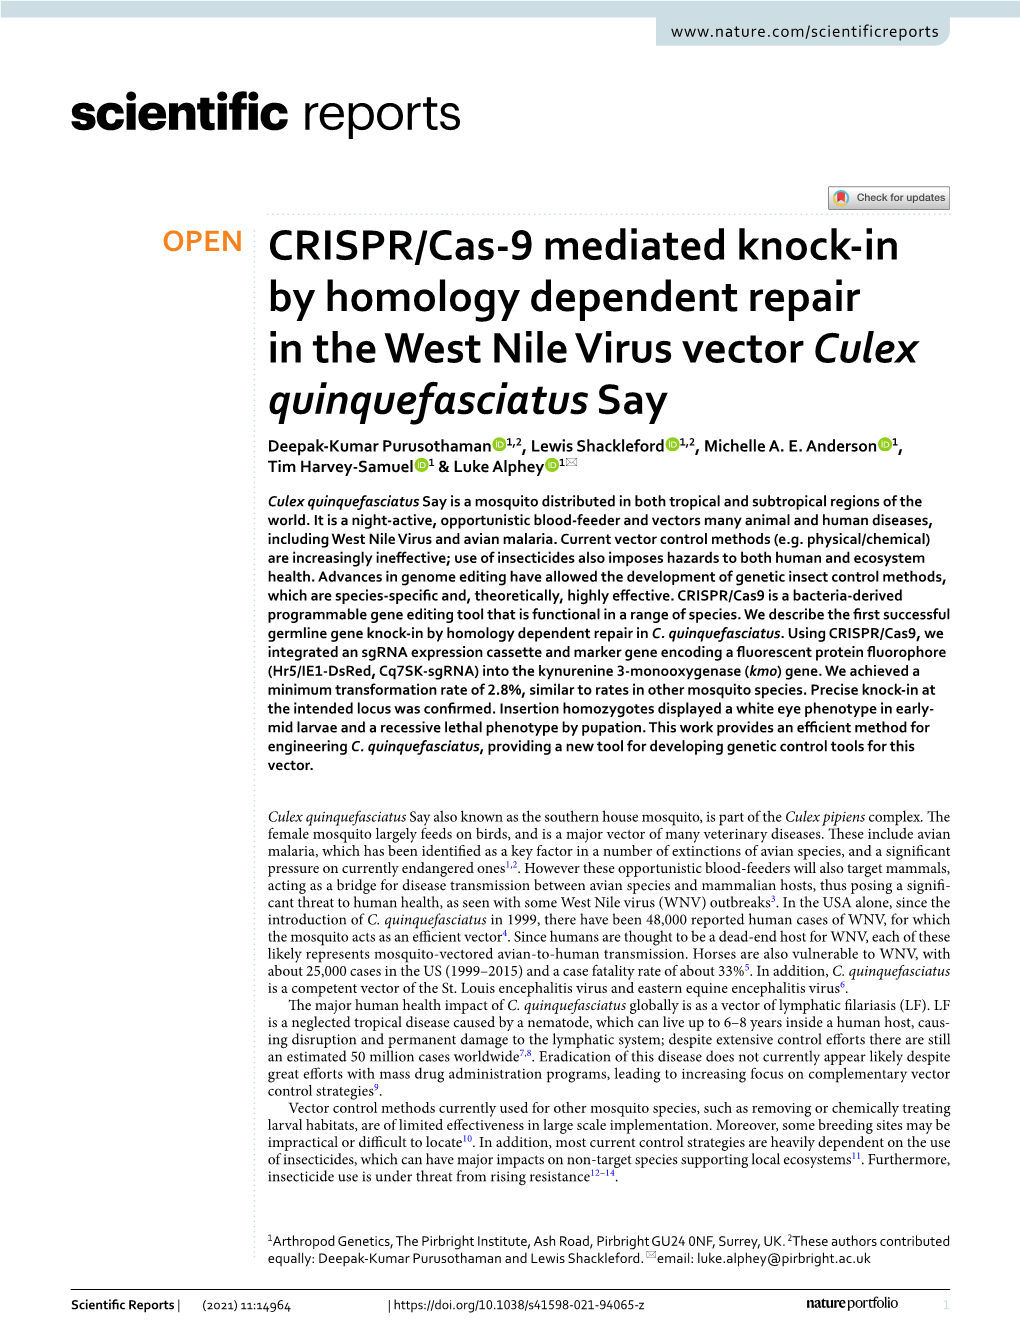 CRISPR/Cas-9 Mediated Knock-In by Homology Dependent Repair in The